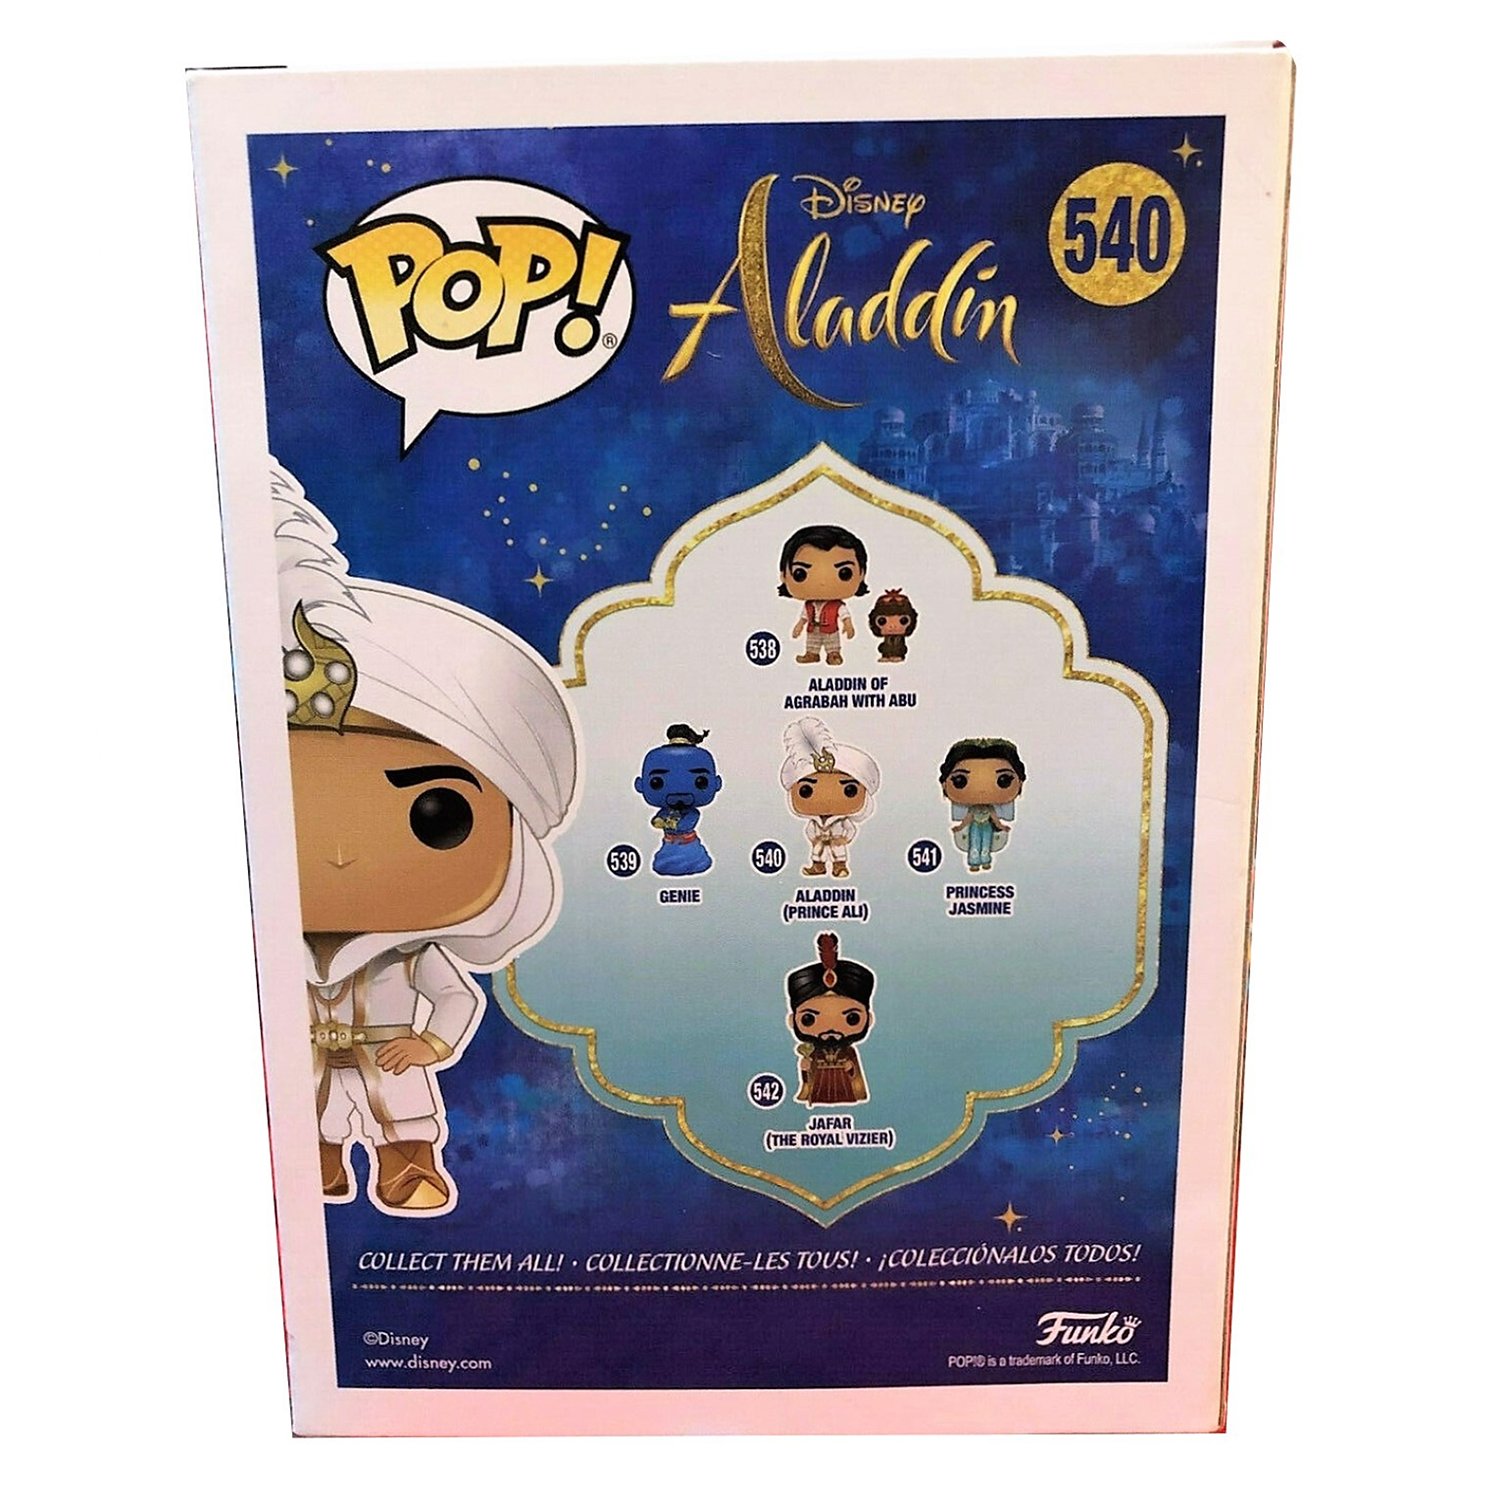 Фигурка Funko Pop vinyl Disney Aladdin Prince Ali Fun2055